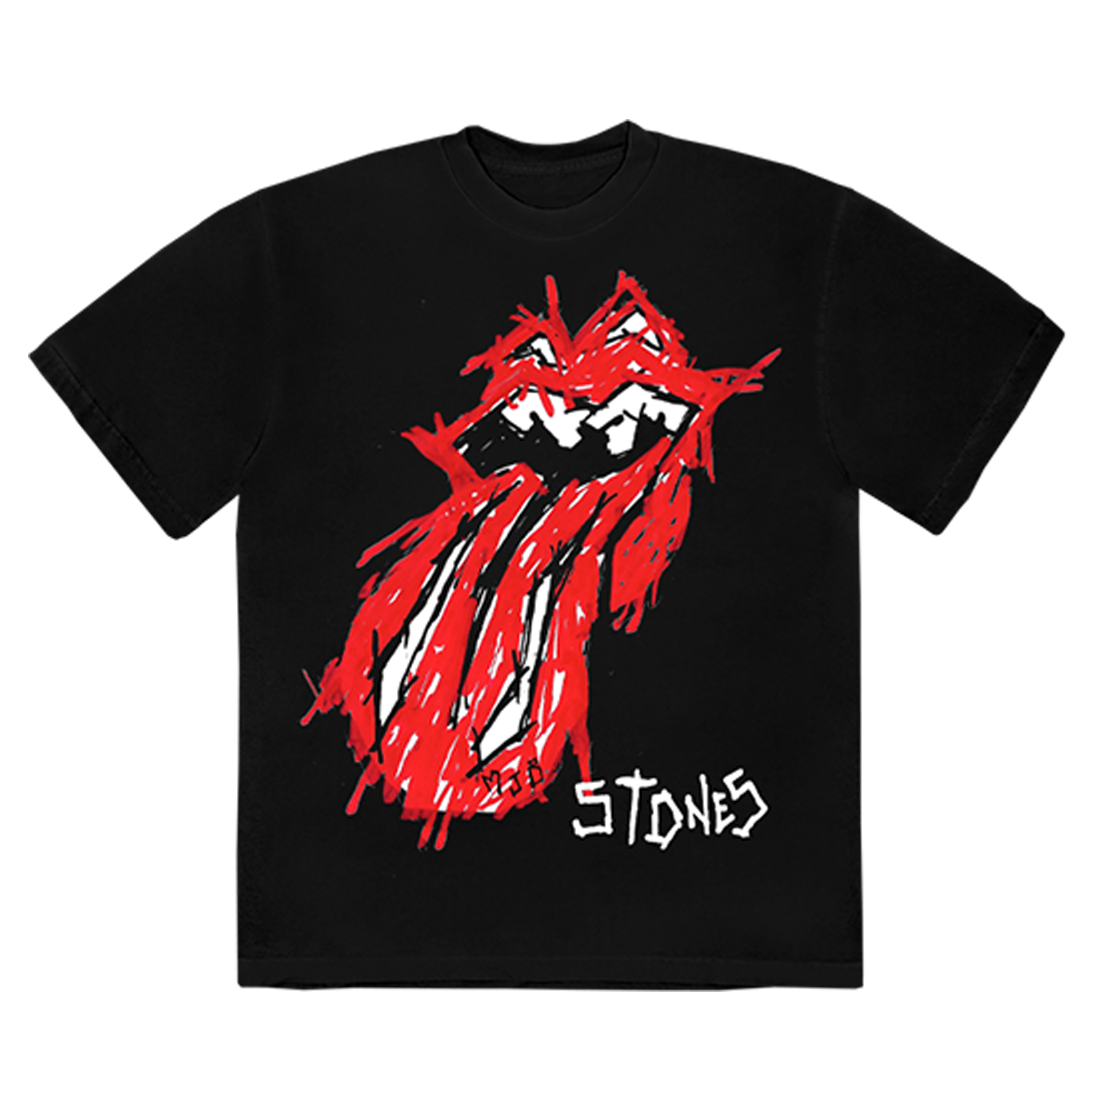 The Rolling Stones - MJB (Marc Jacques Burton) X The Rolling Stones - No Filter Hand Drawn Tongue Black T-Shirt